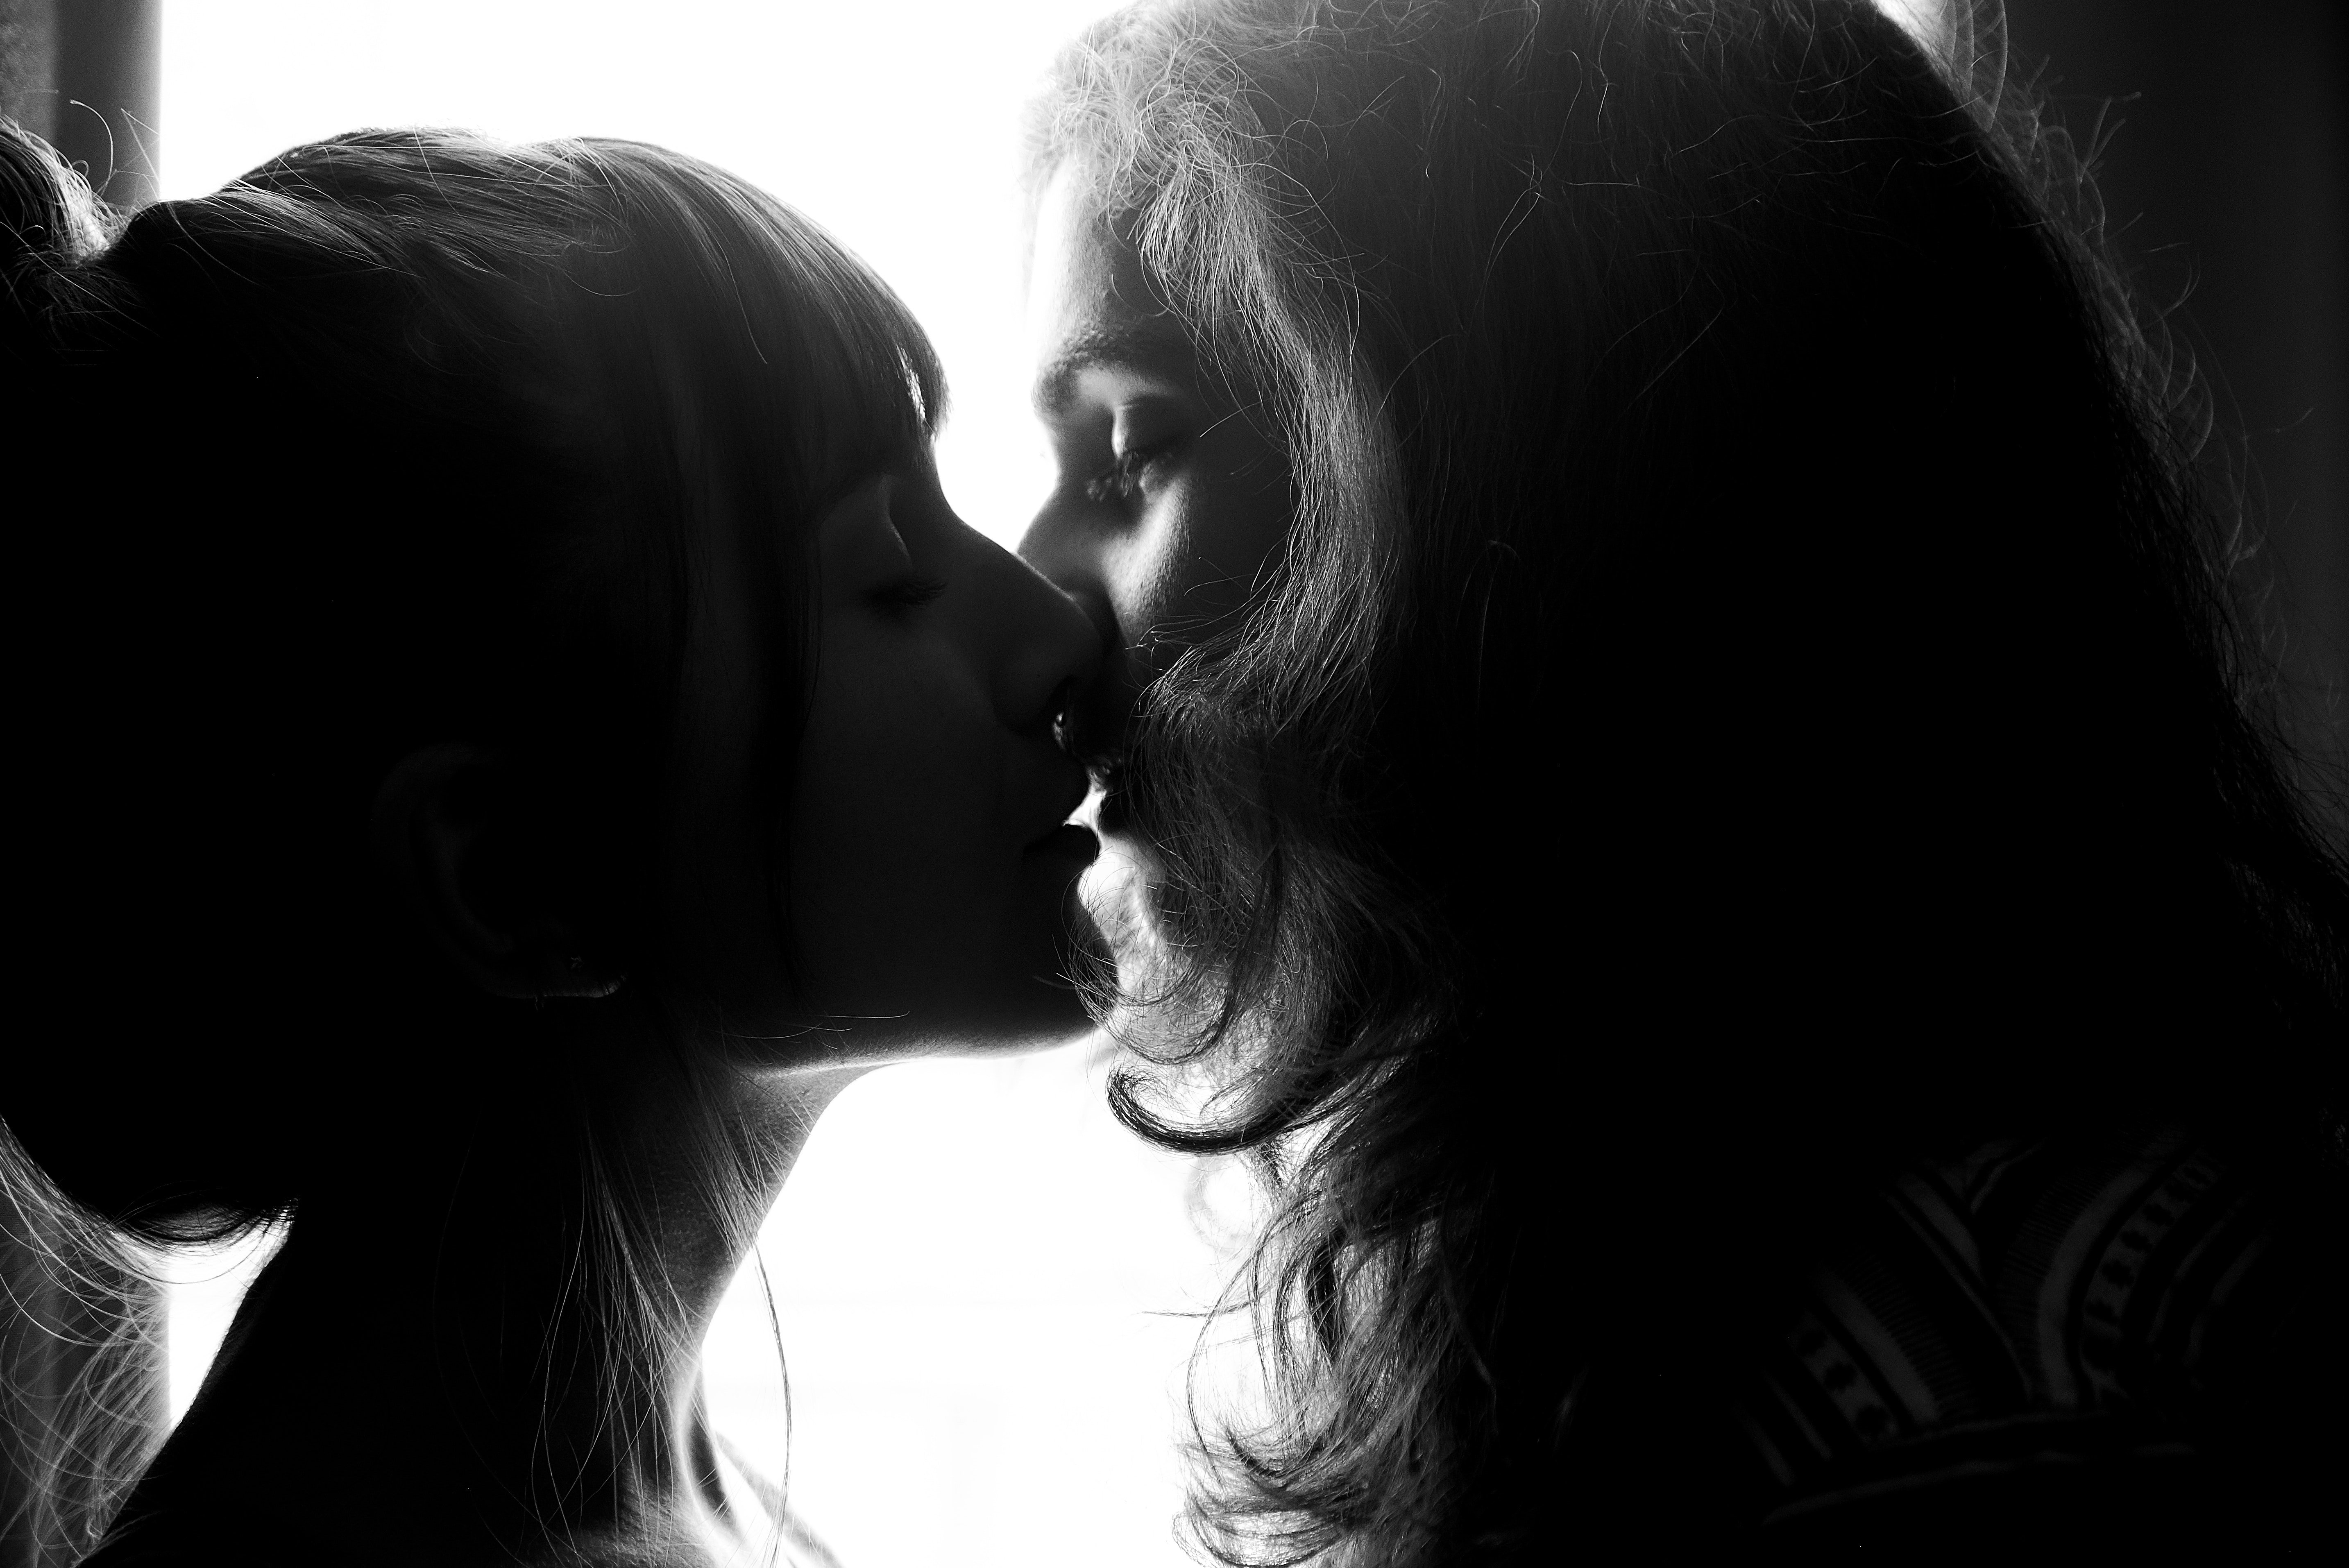 Lesbians 2 girl. Две девушки любовь. Поцелуй девушек. Поцелуй двух девушек. Красивый поцелуй.